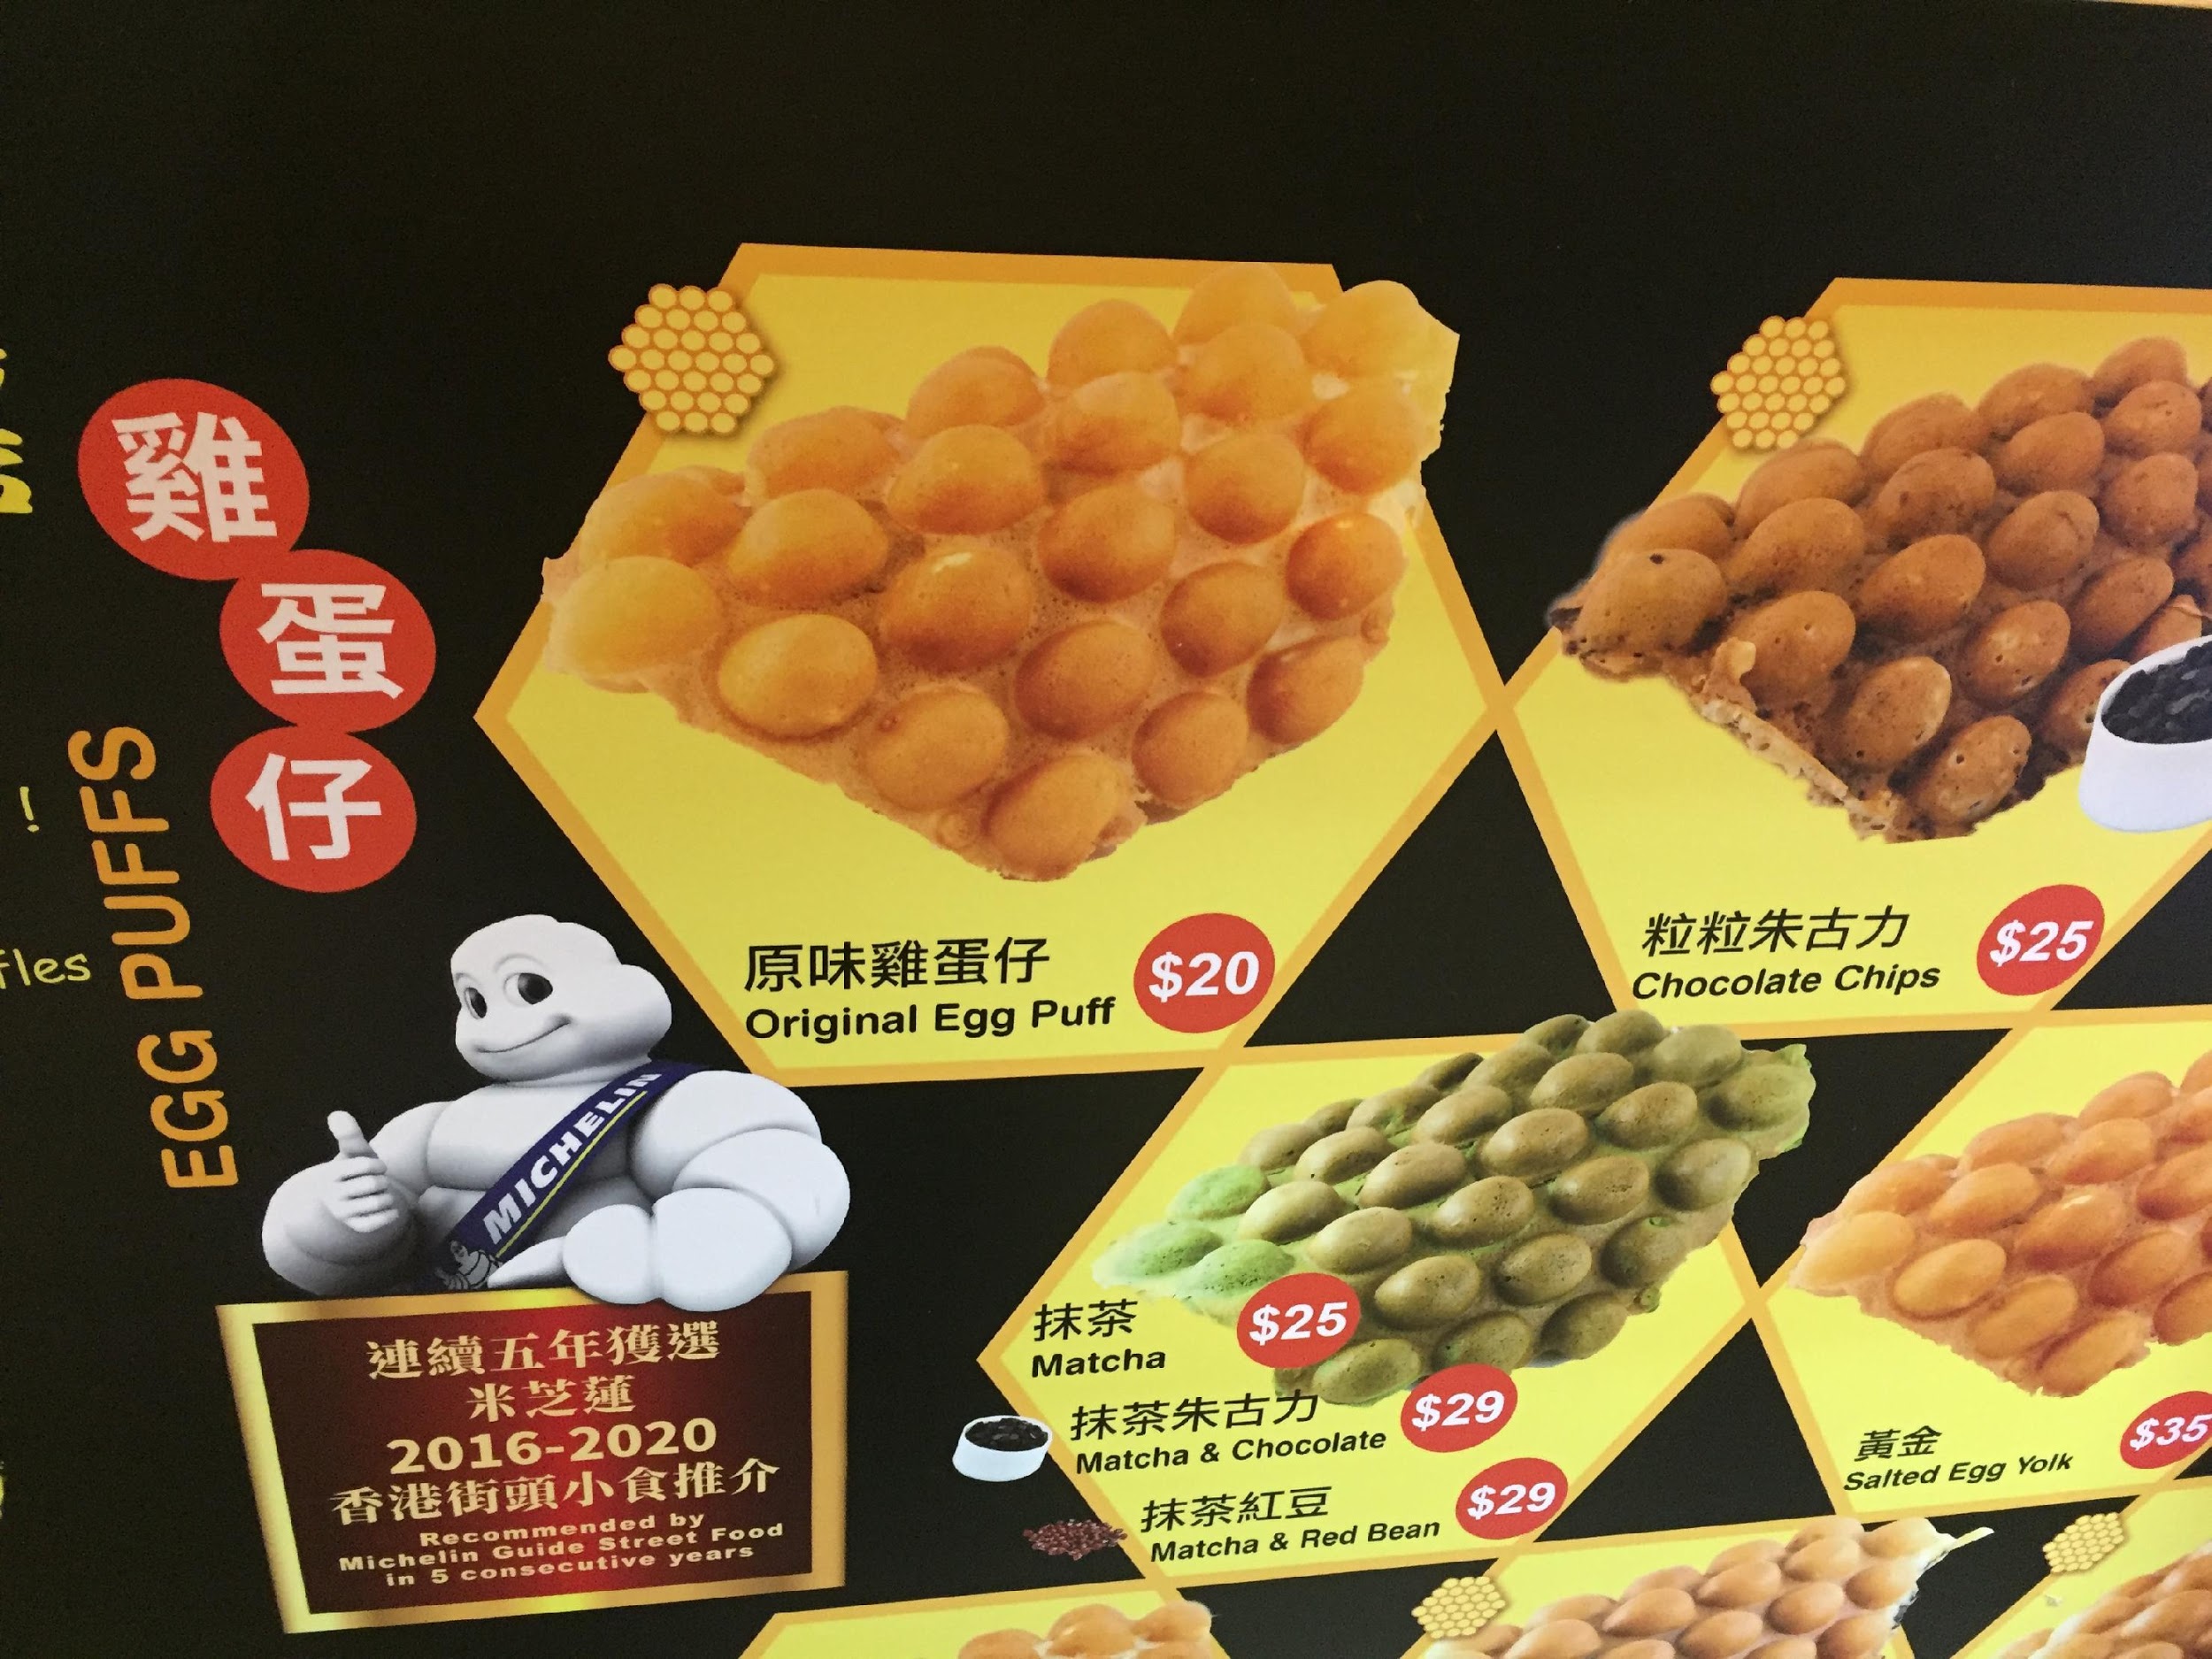 egg puff sign in hong kong